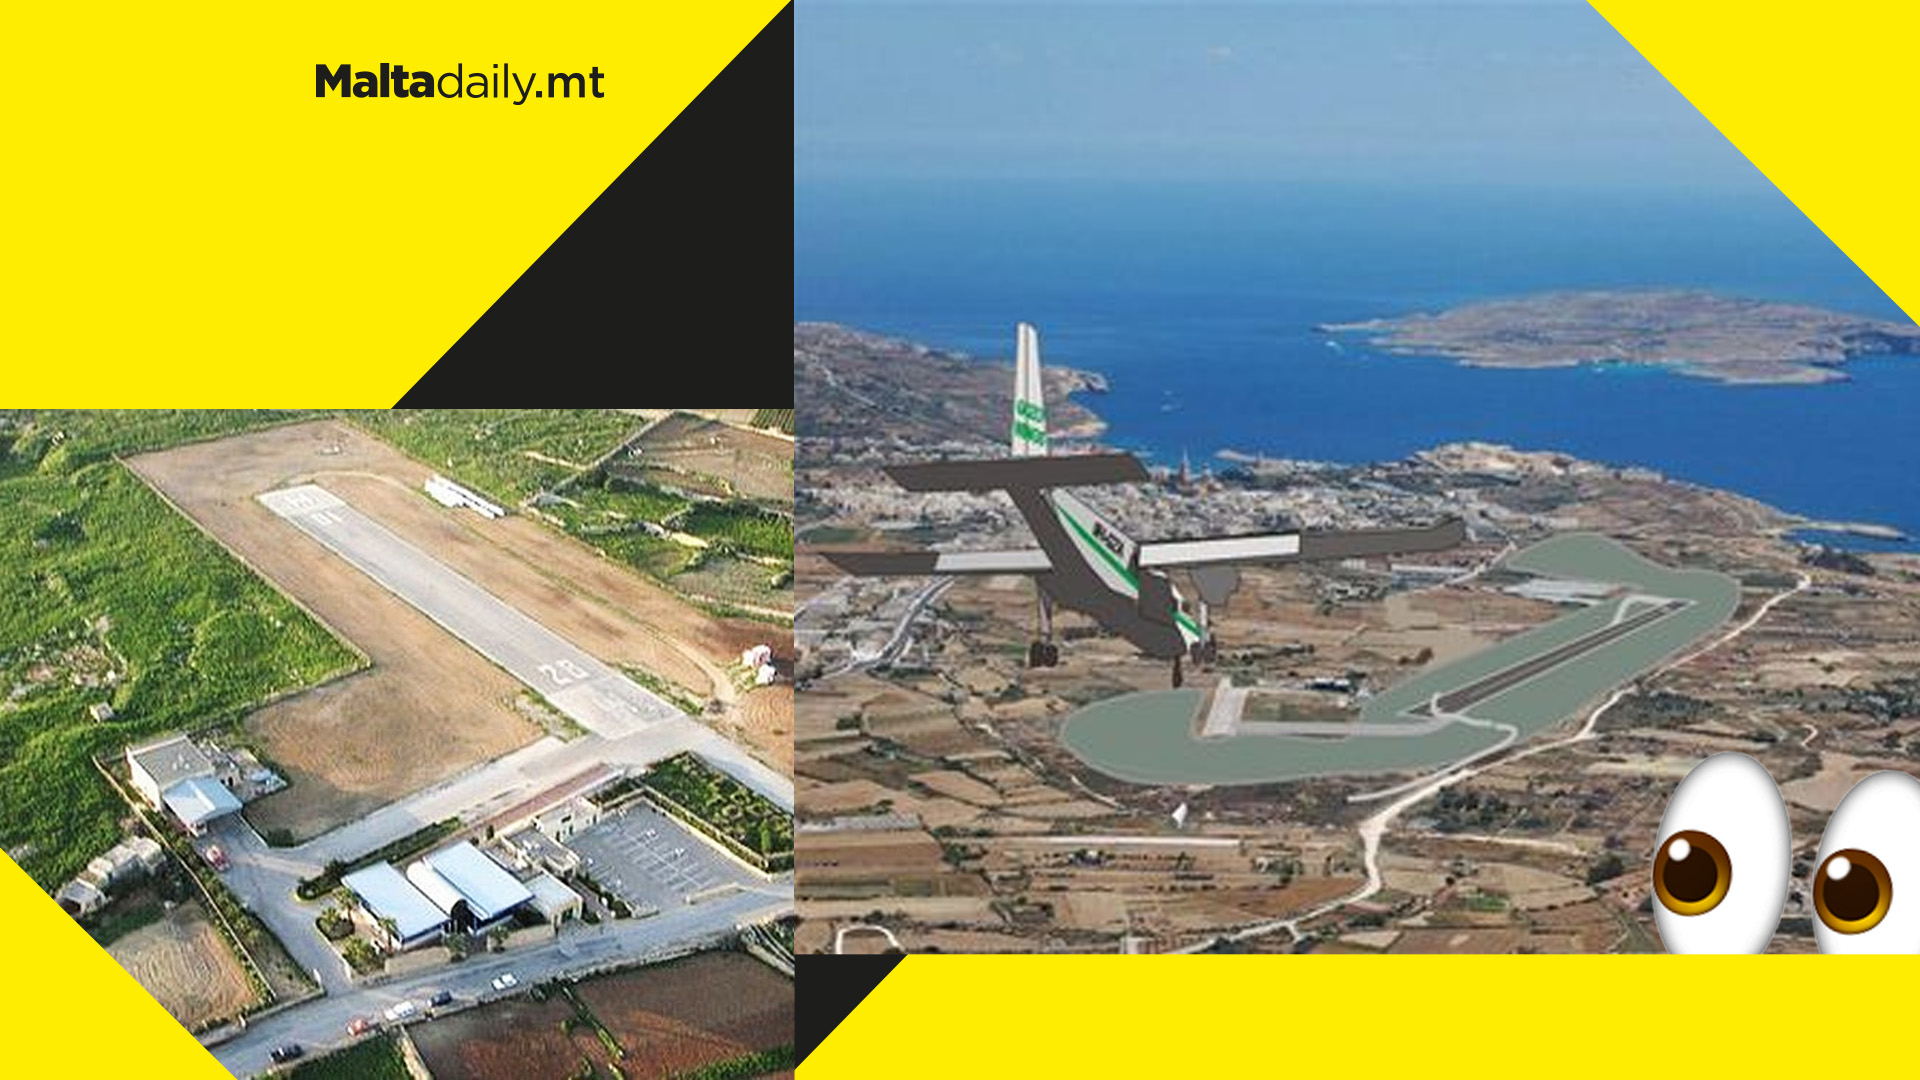 Gozo-Malta plane ticket may cost up to €35, GRDA reveals